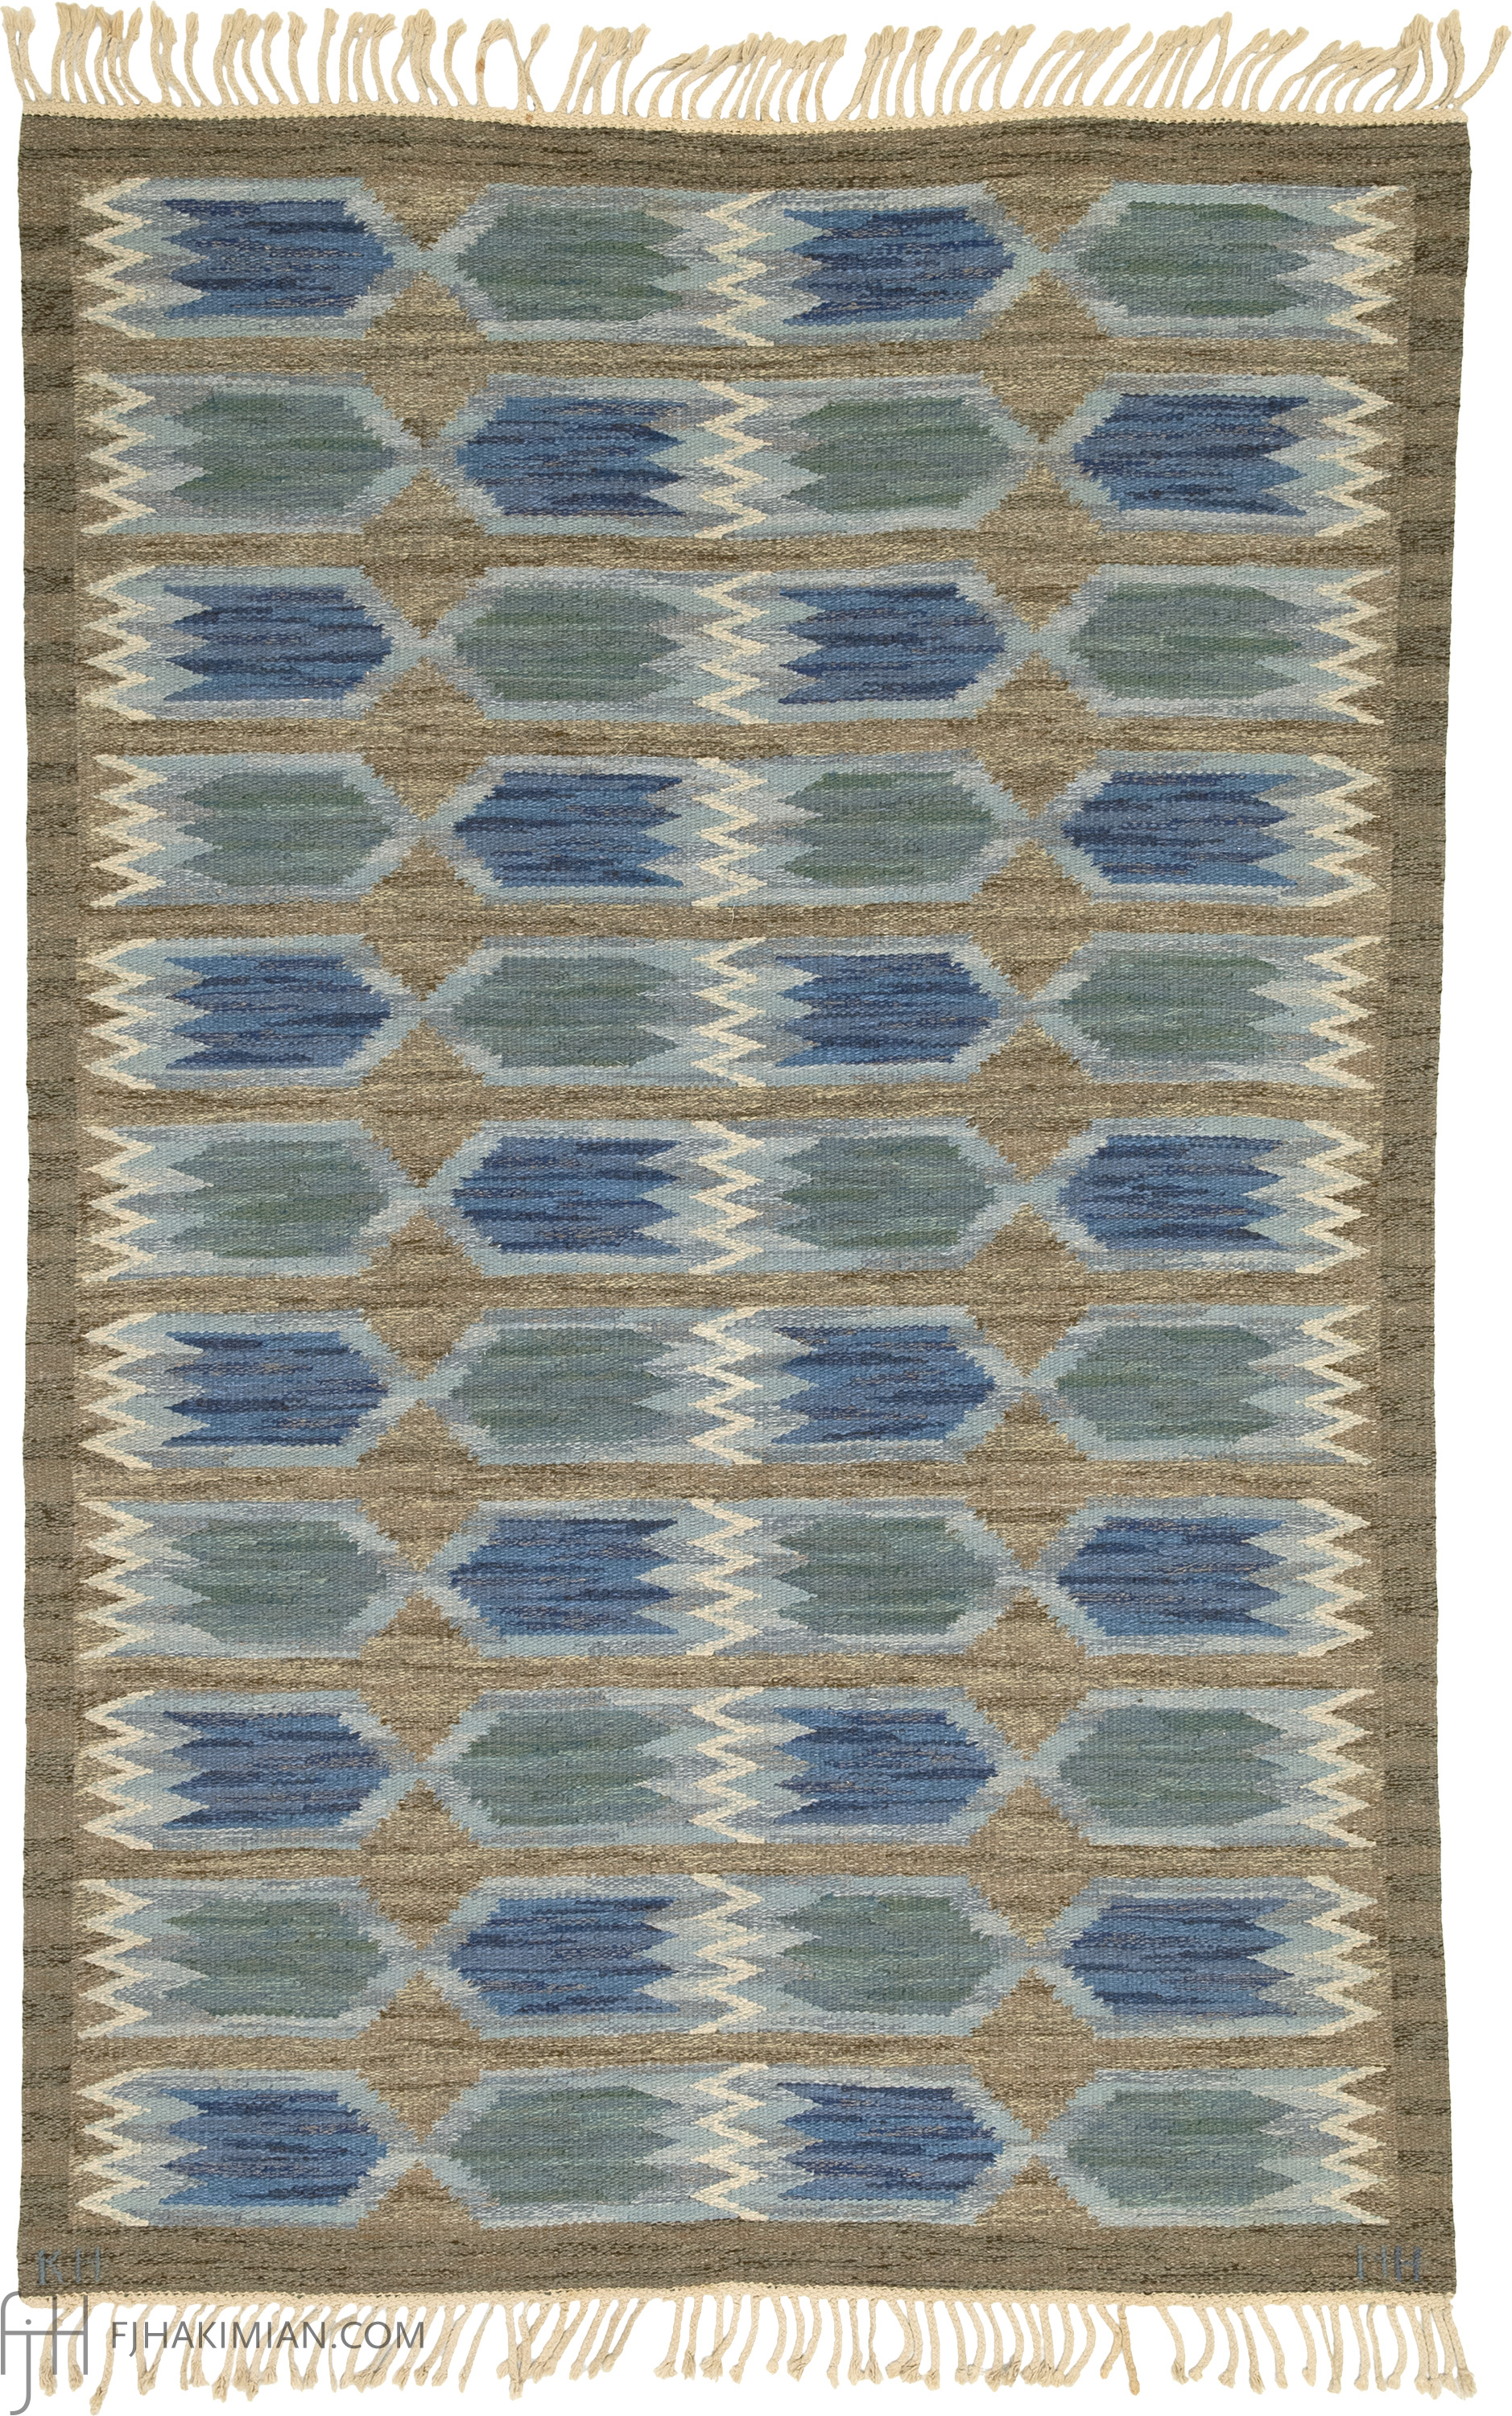 Mid-20th-Century Swedish Flatweave Signed KH NH, by Nea Hållfast | FJ Hakimian | Carpet Gallery in NYC